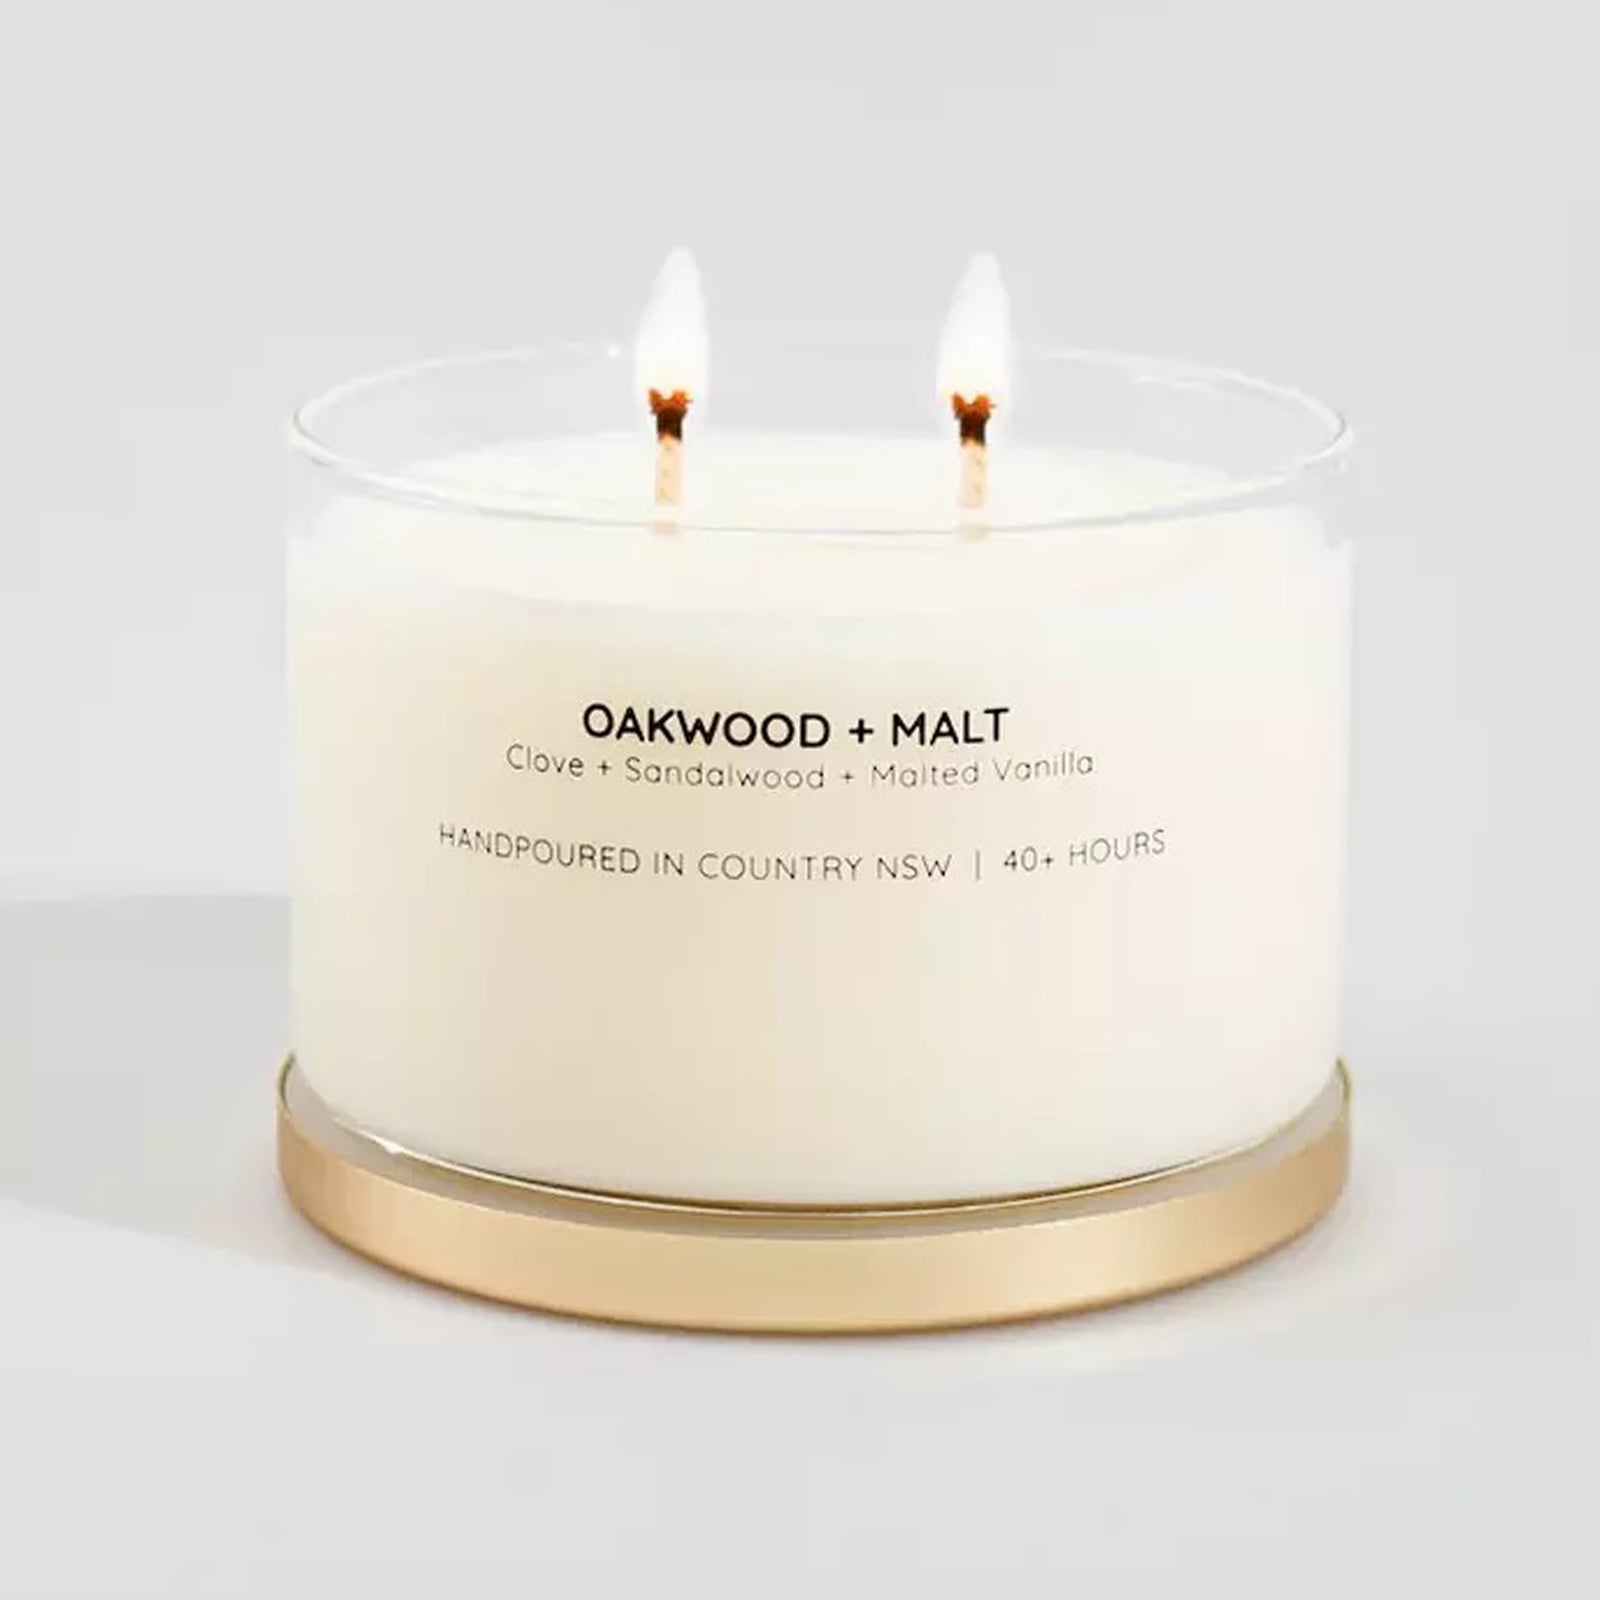 100% Natural Soy Wax "Oakwood & Malt" Candle from Australia (330g) - Horizon Farms